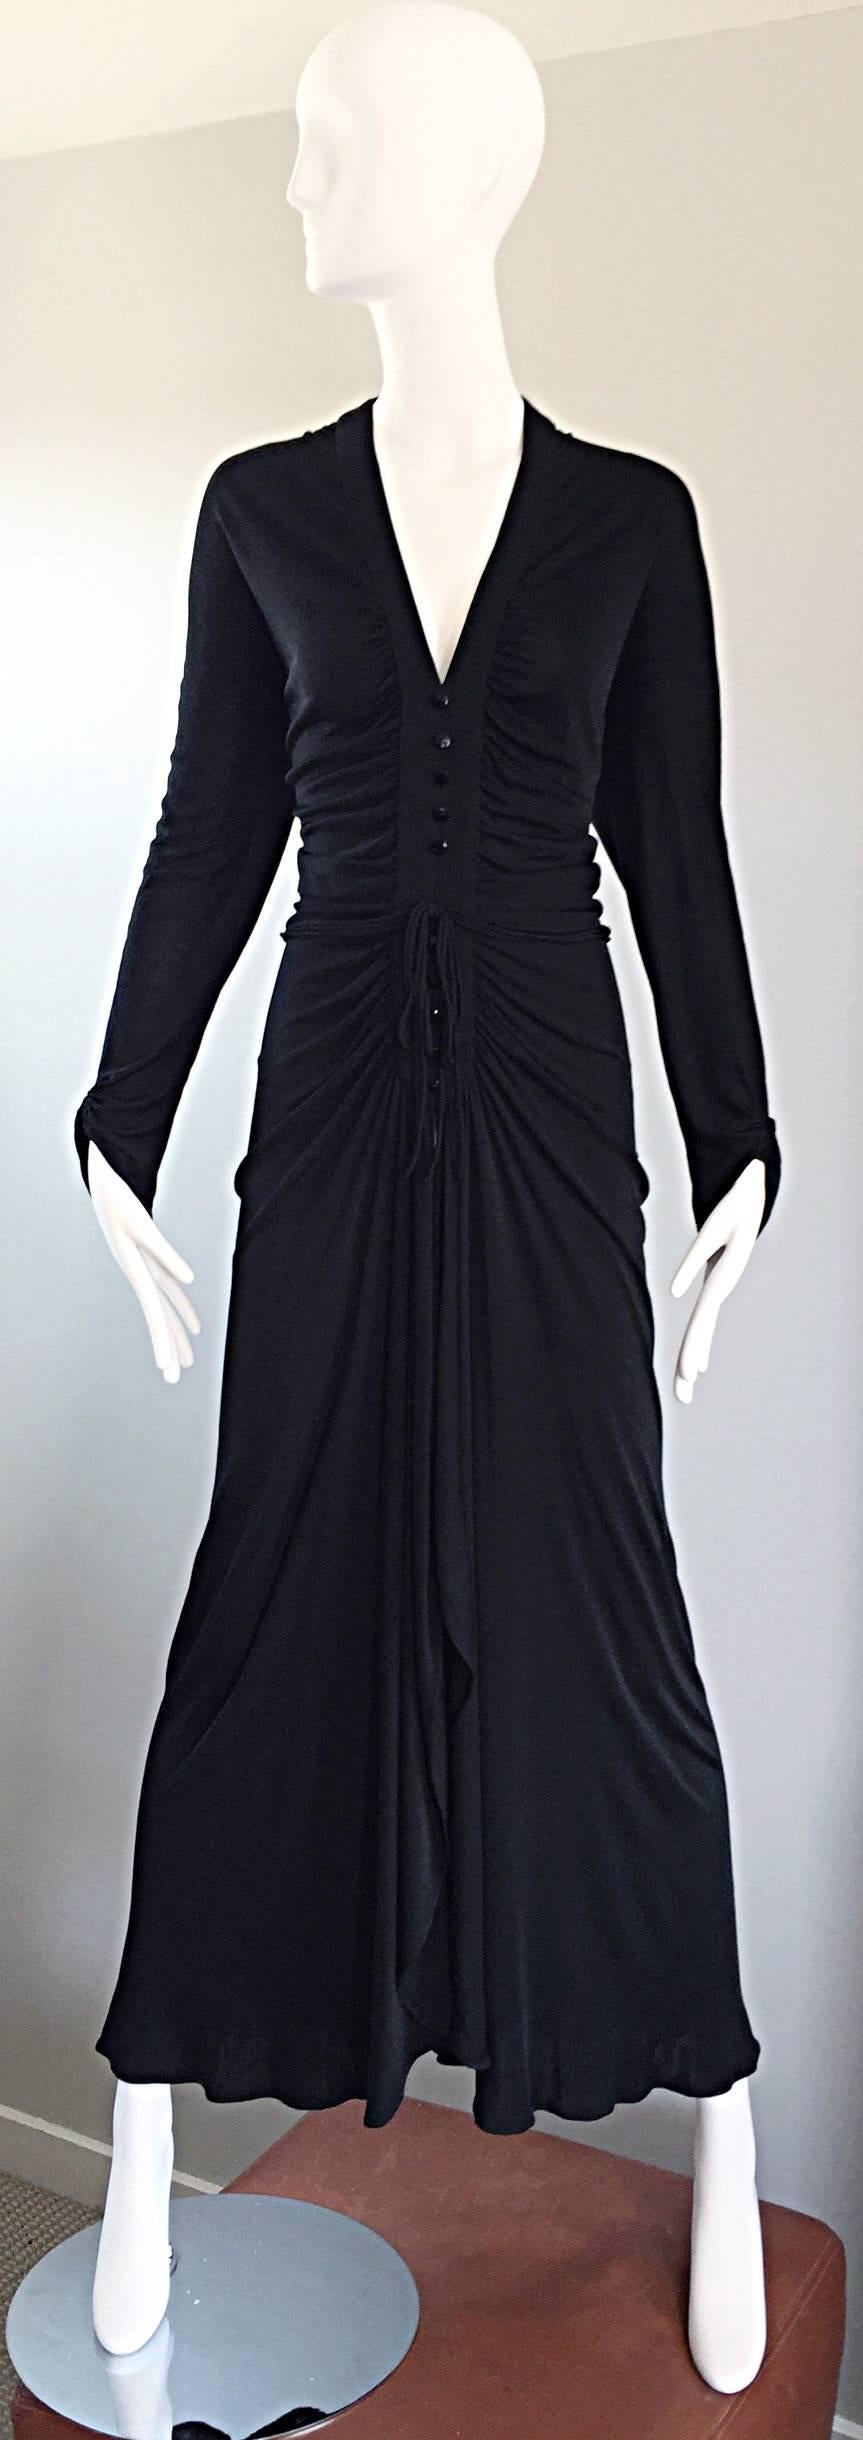 Nina Ricci Vintage 1970s Long Sleeve Jersey Grecian Inspired Black Disco Dress For Sale 2